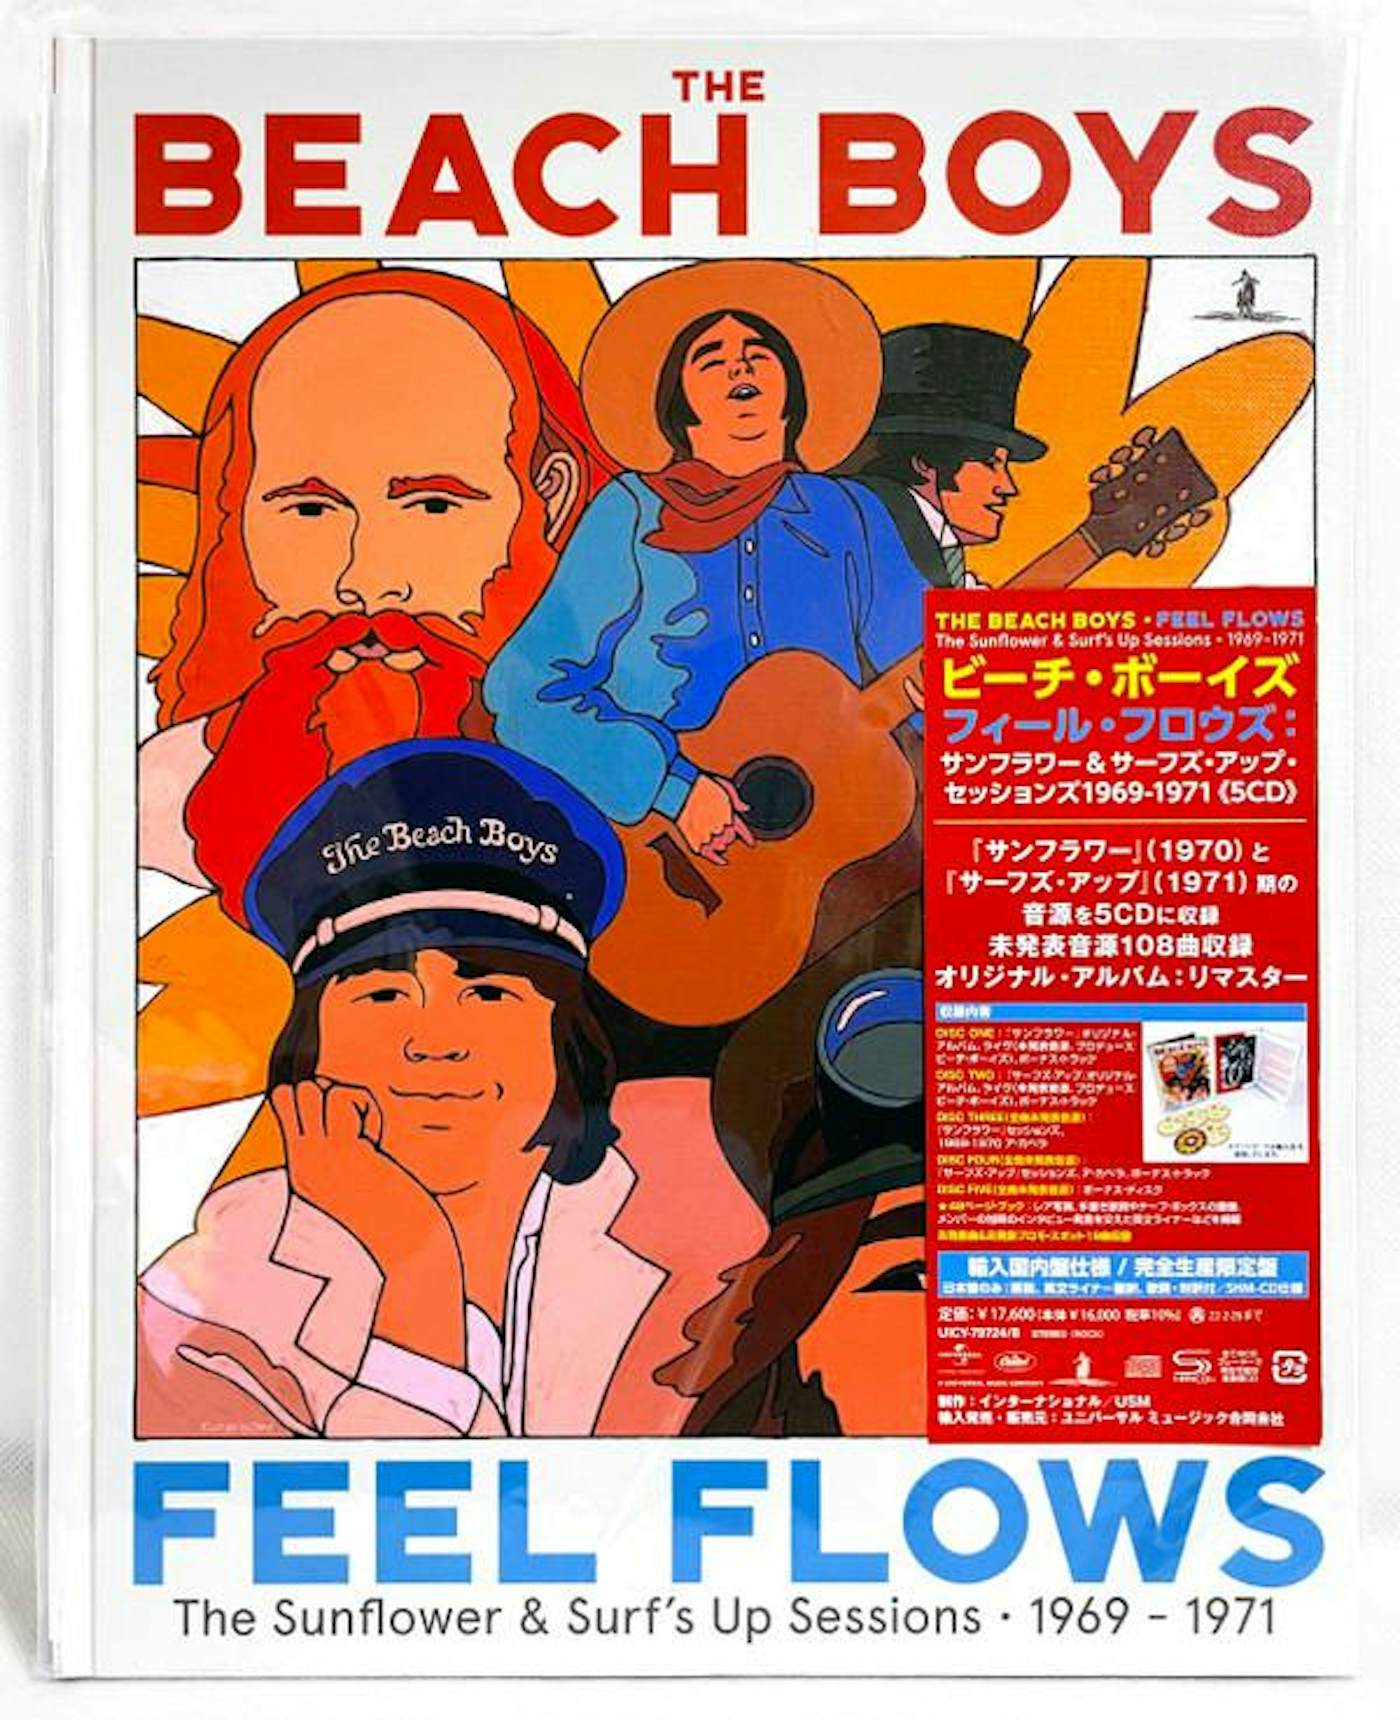 The Beach Boys FEEL FLOWS: SUNFLOWER & SURF'S UP SESSIONS 69-71 CD